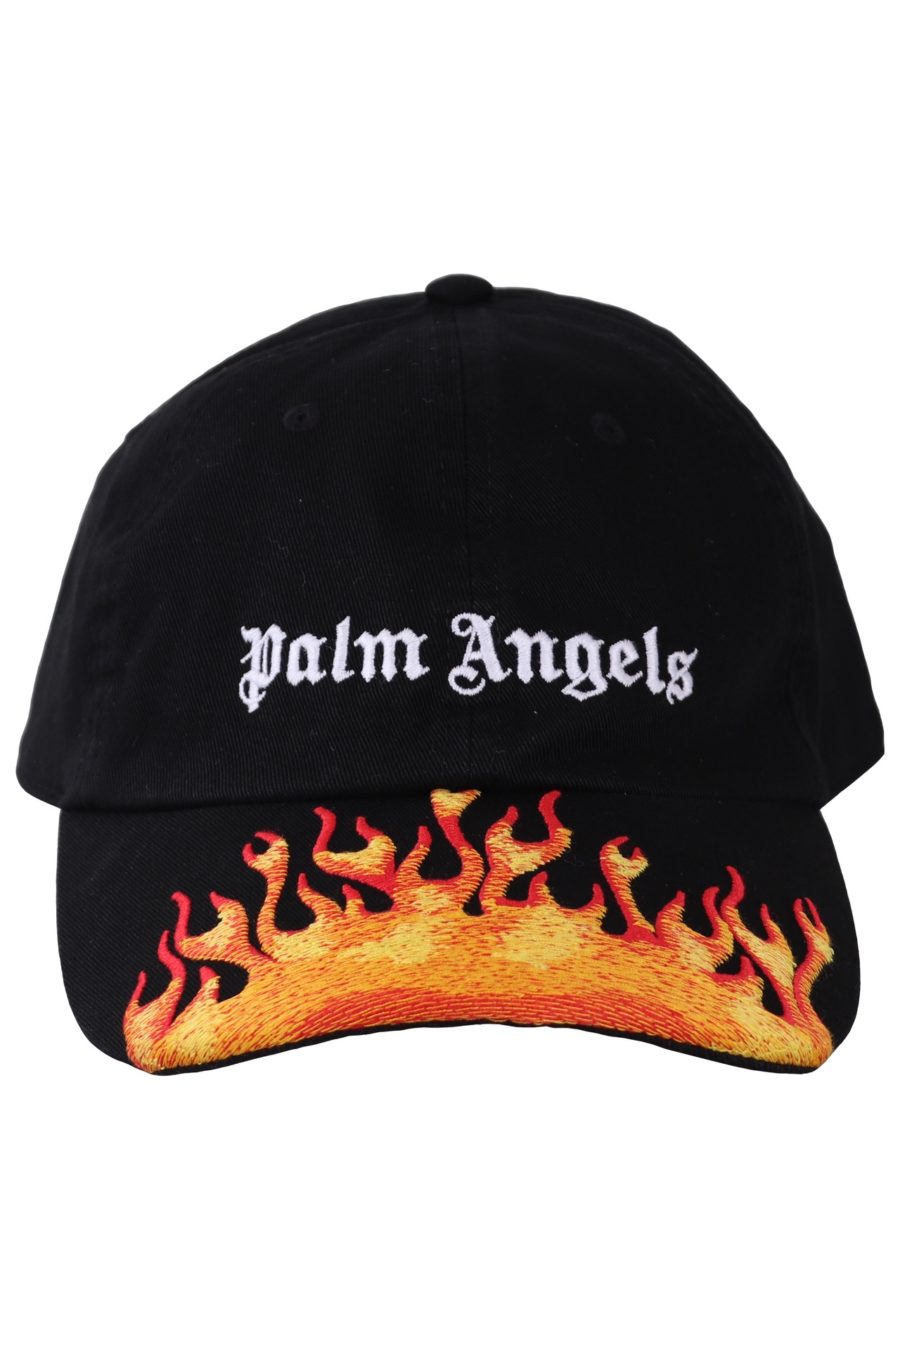 Palm Angels cap black with flame - 37f942e8112930ab318ec081c9c26f43a83964c7